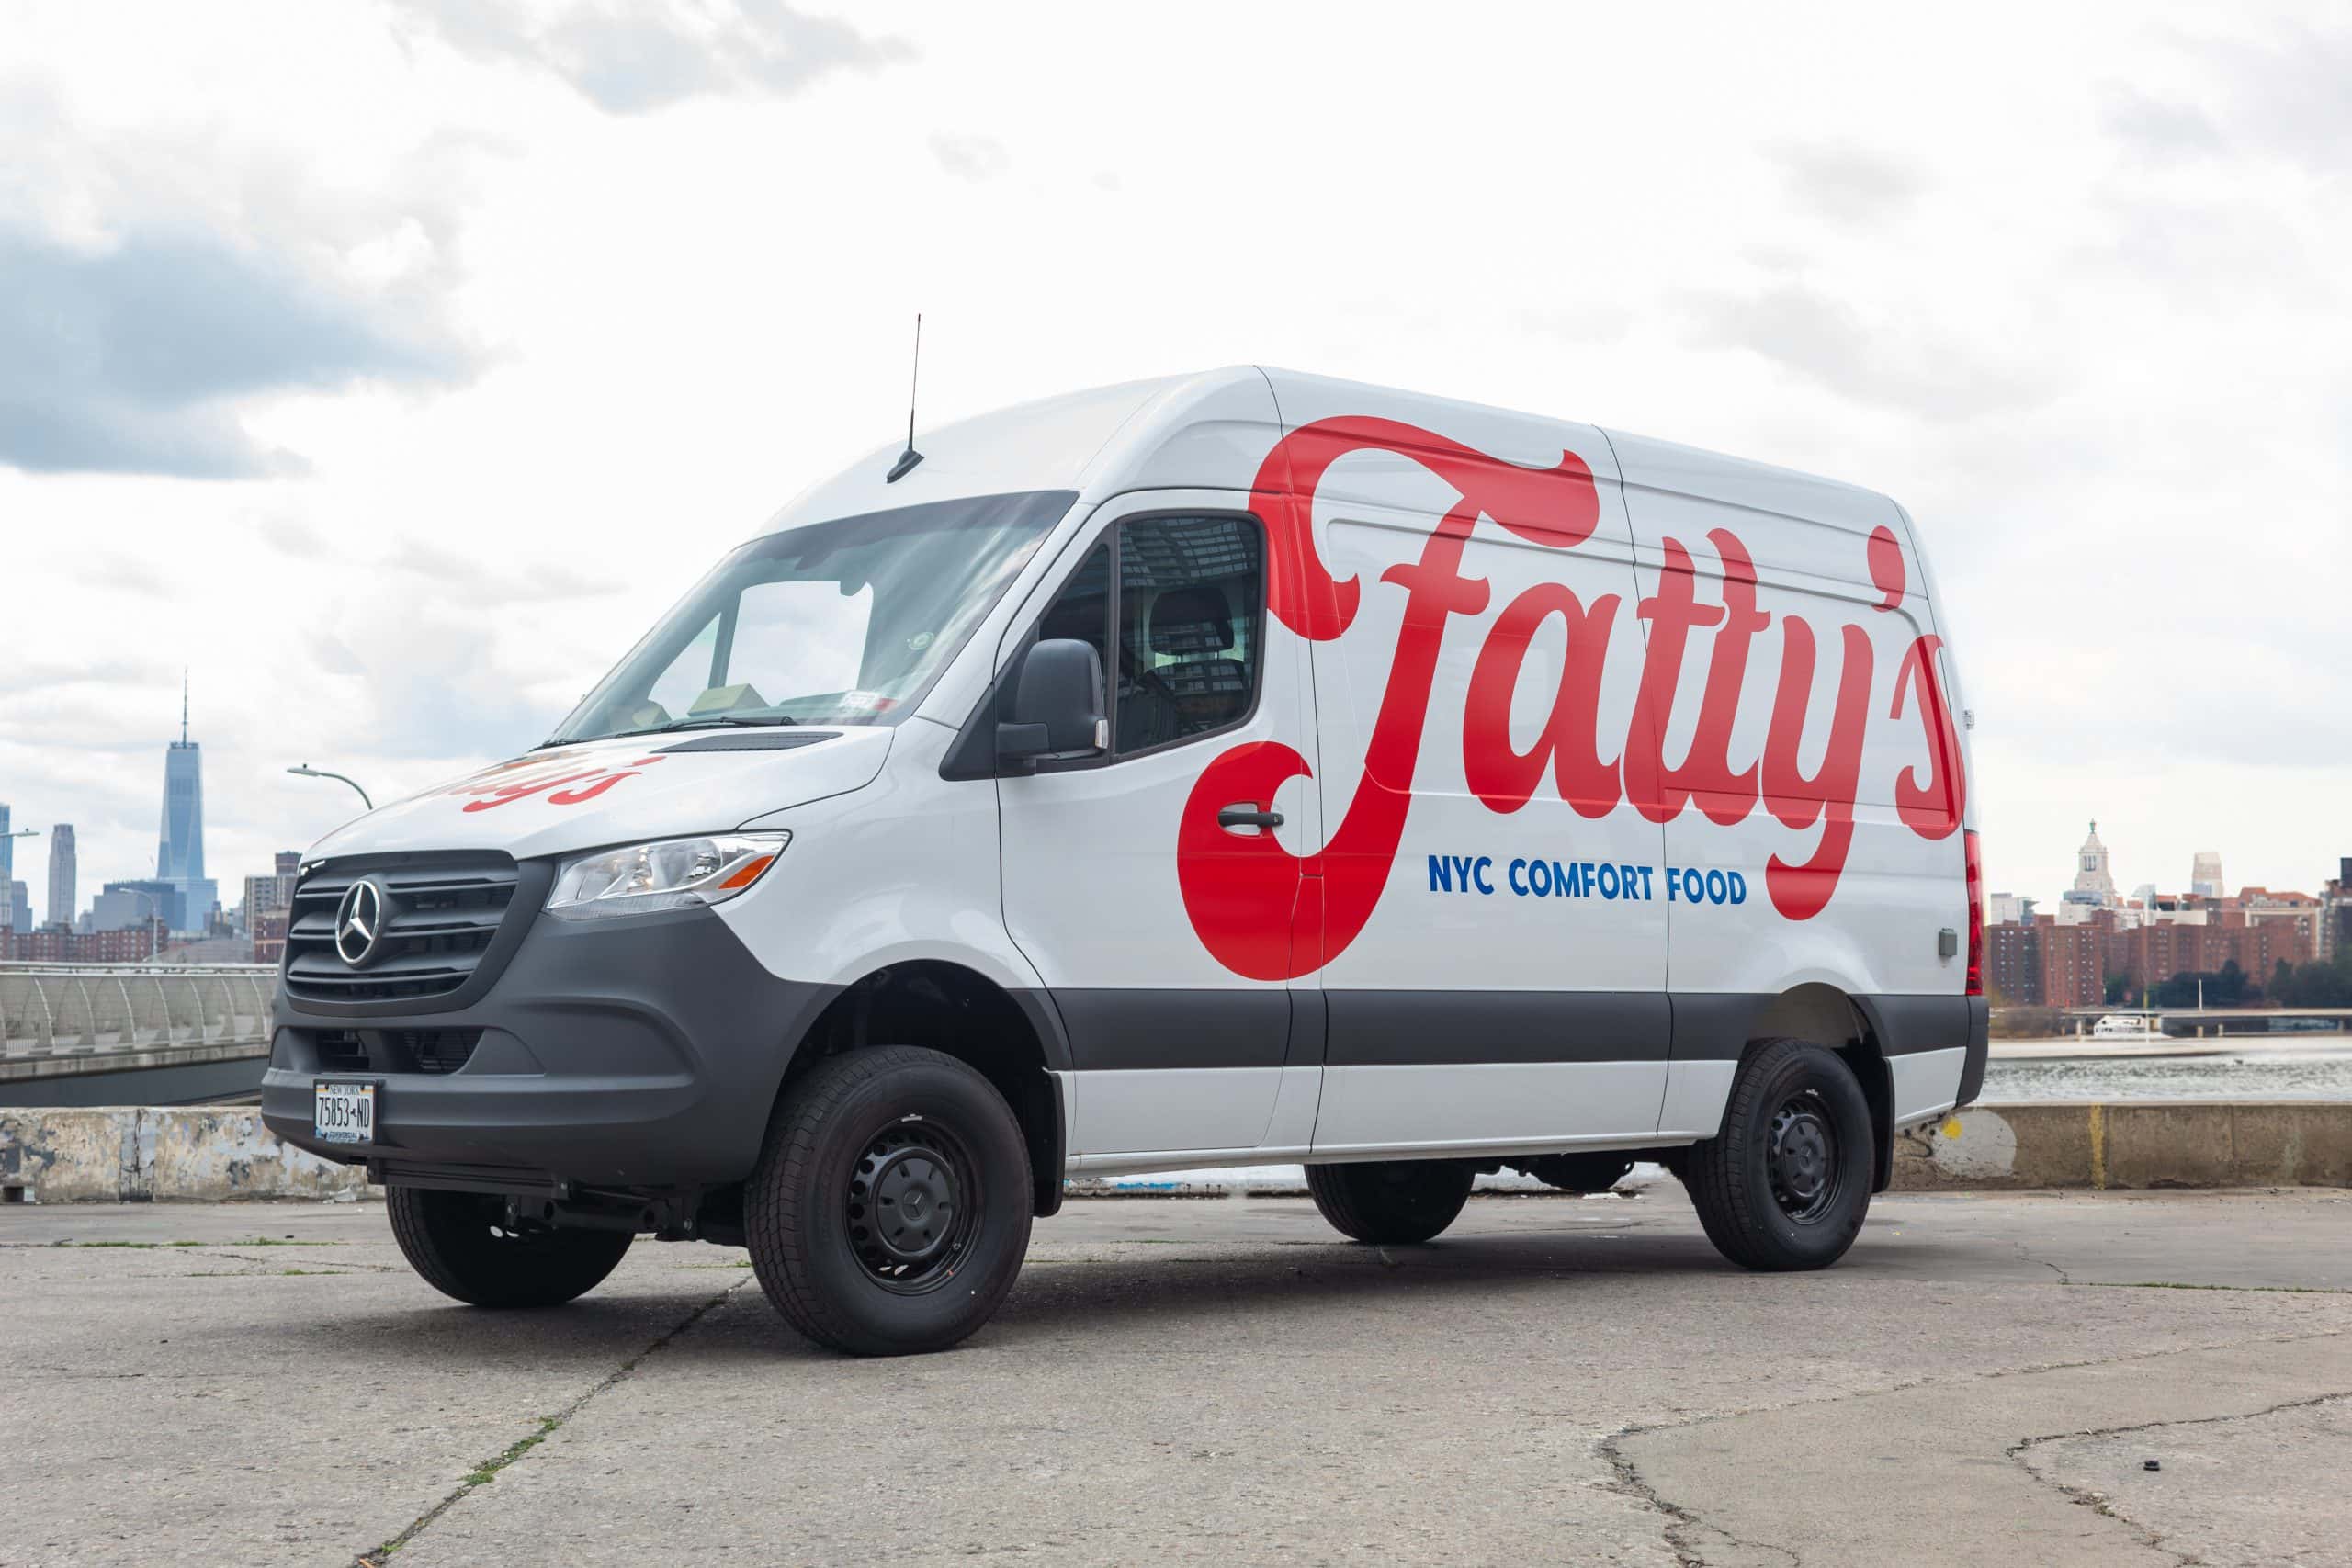 fattys new truck (van)